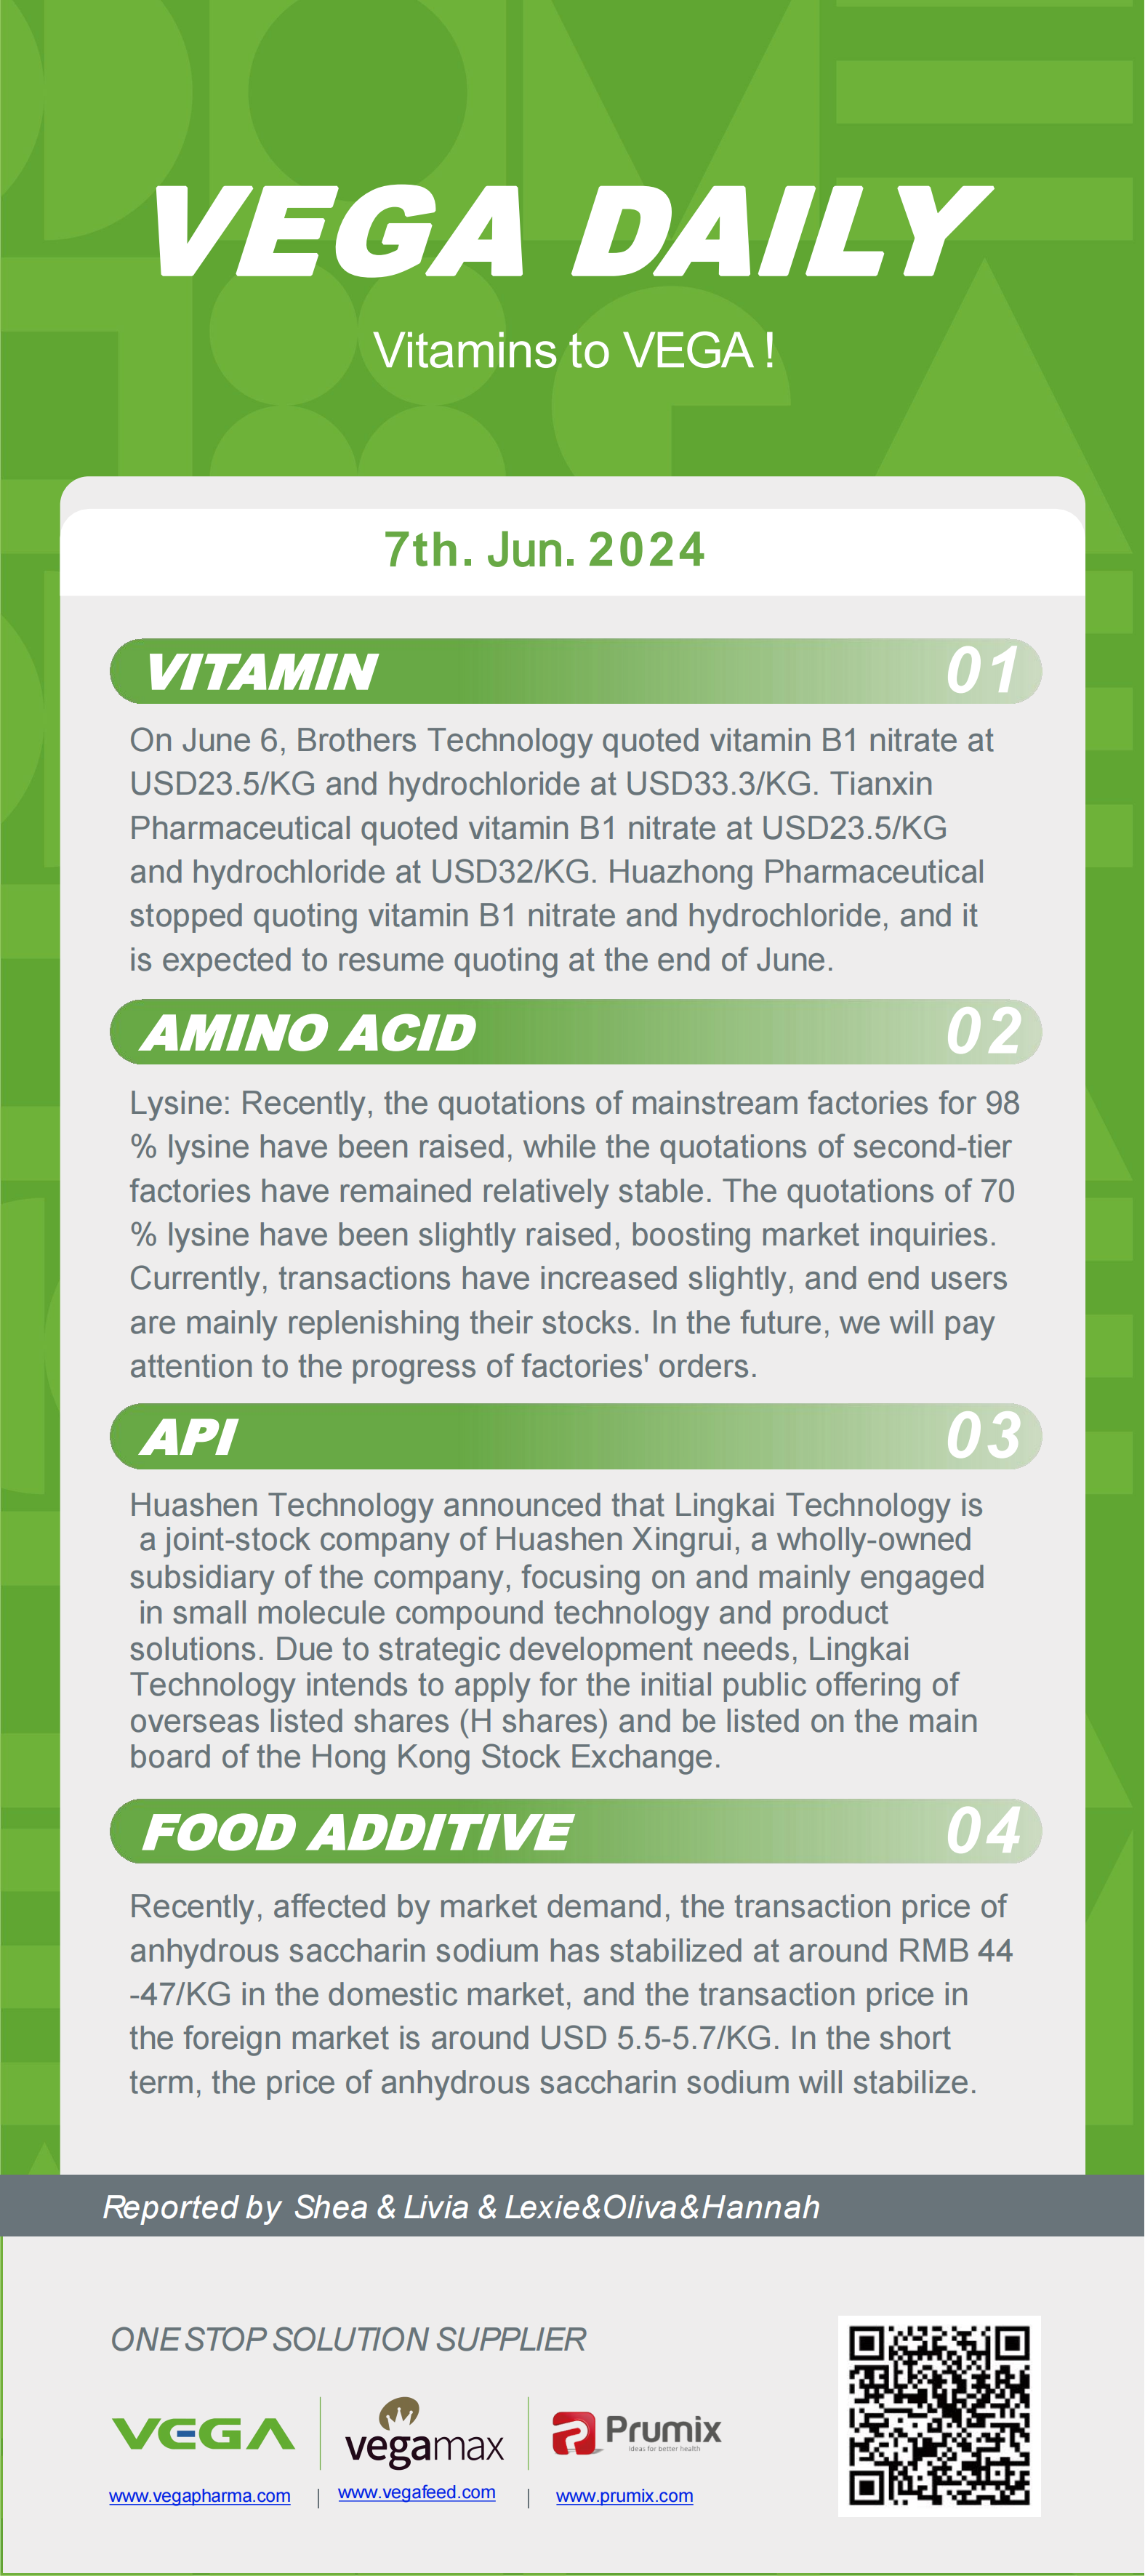 Vega Daily Dated on Jun 7th 2024 Vitamin Amino Acid APl Food Additives.png